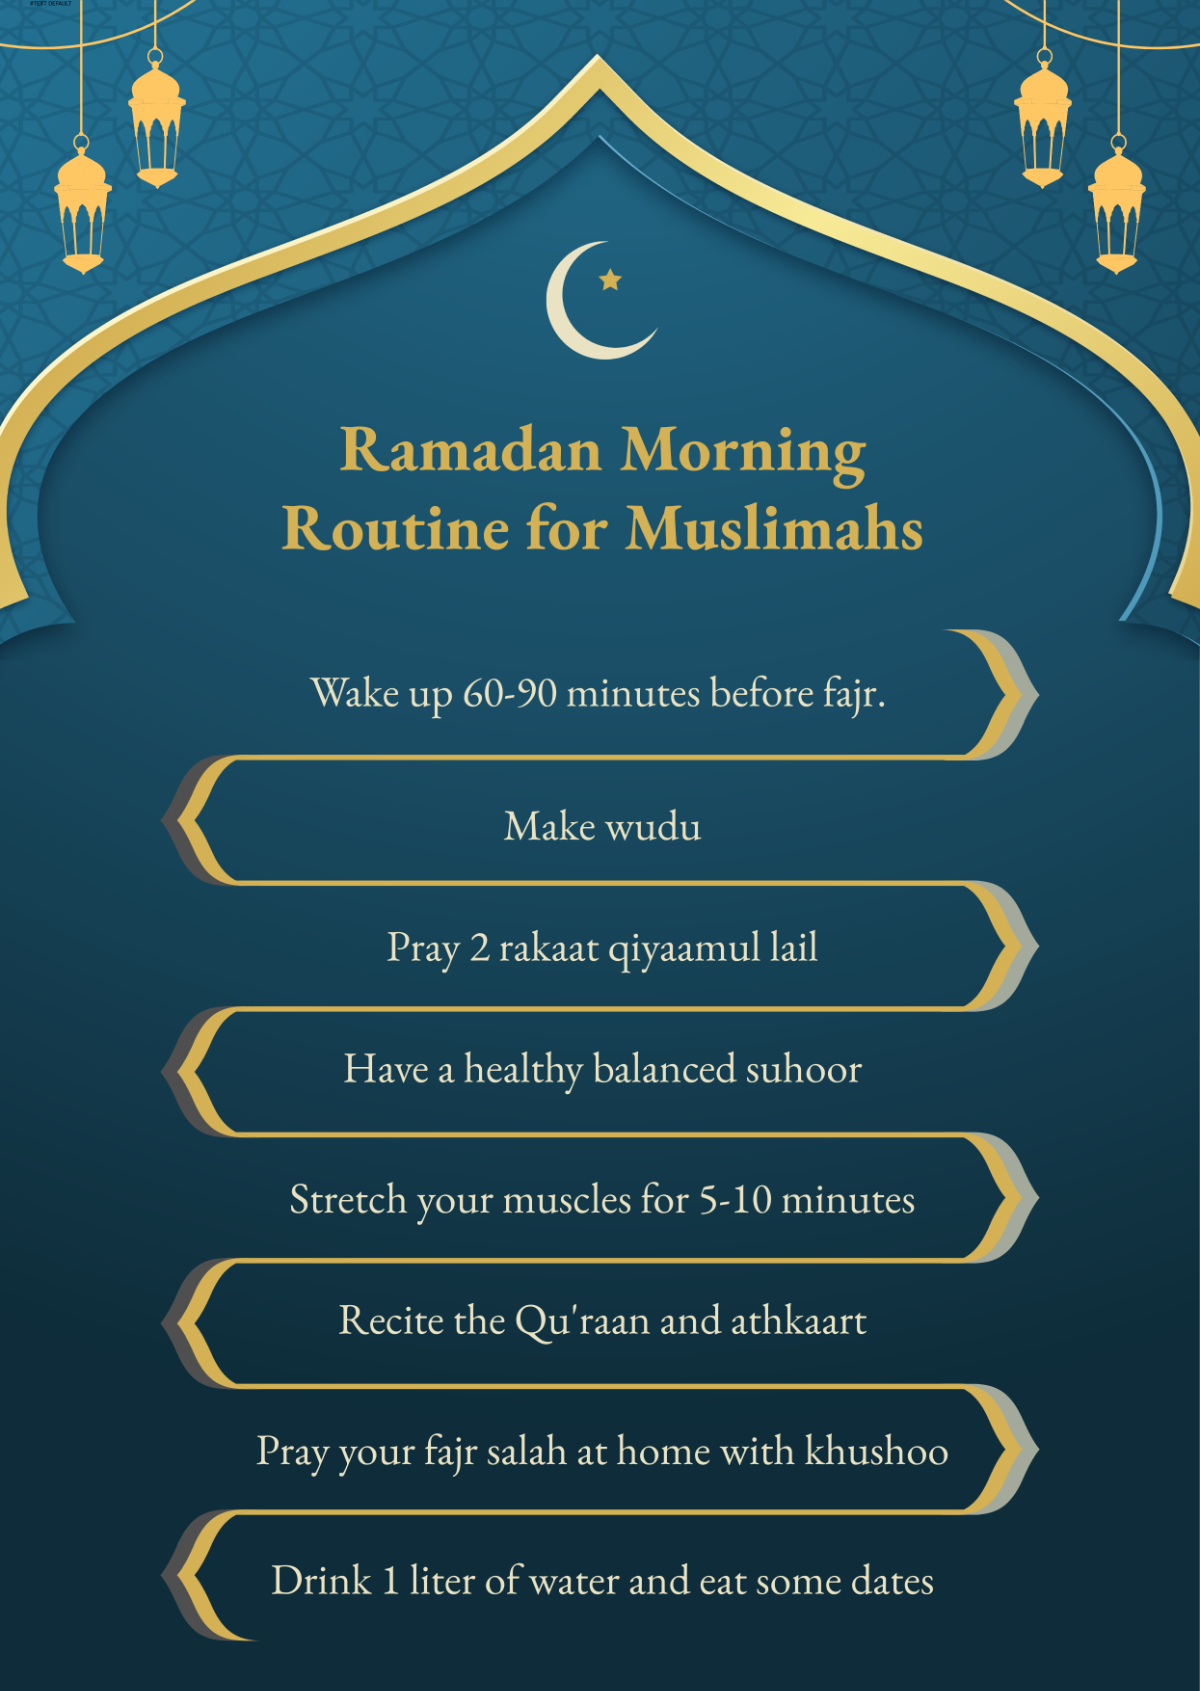 Ramadan Morning Routine for Muslimah's Template